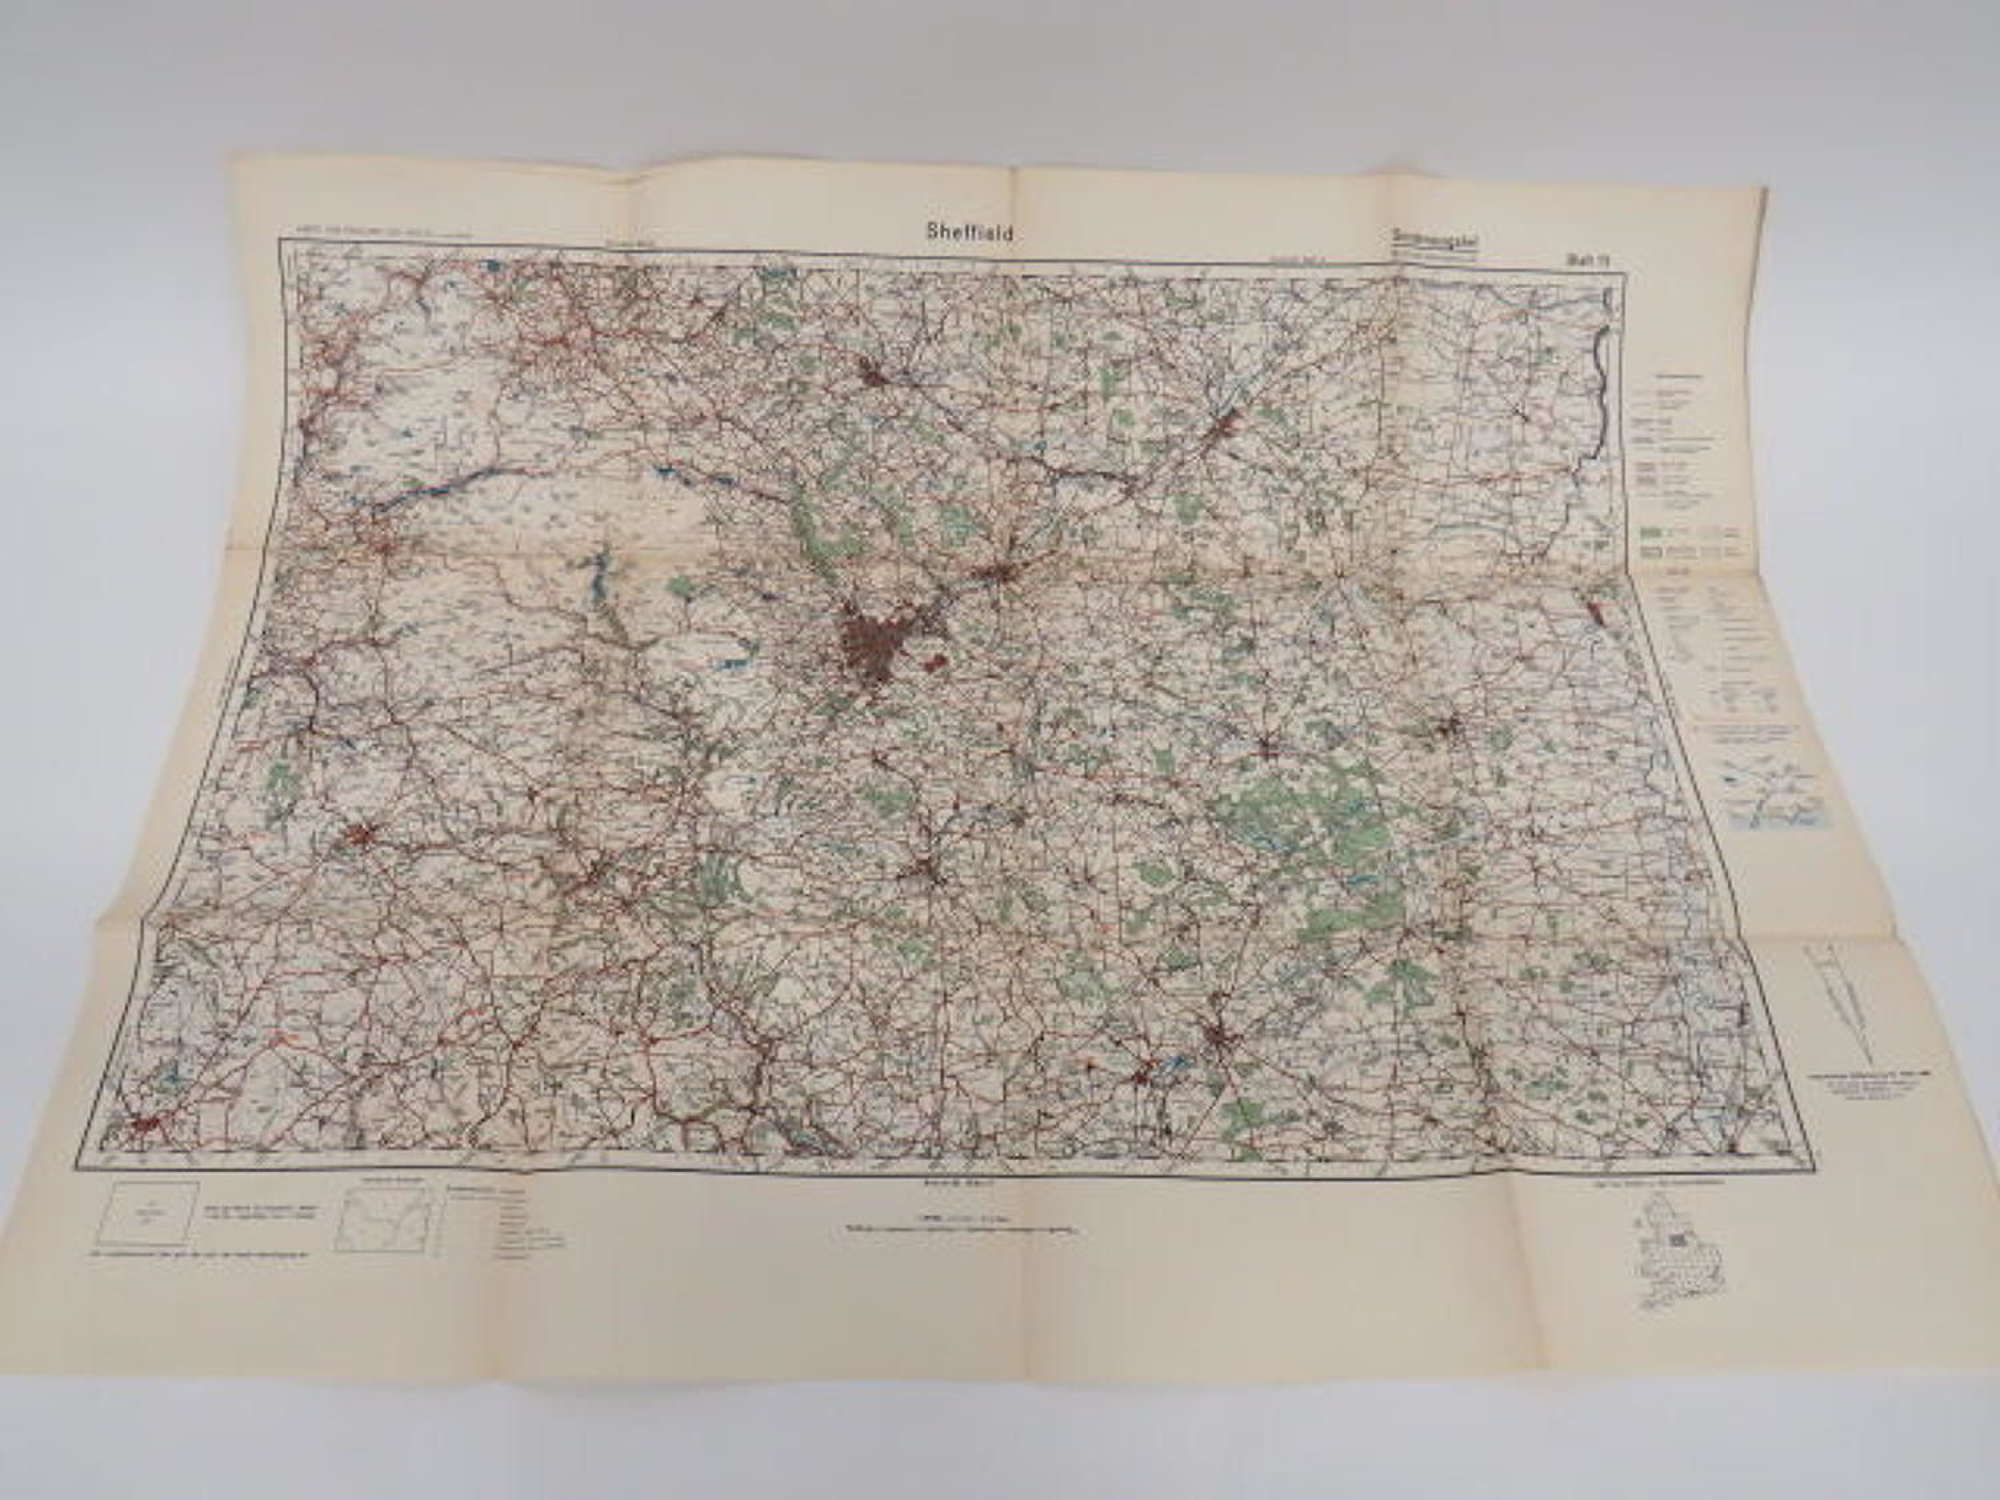 WW 2 German Invasion Map of Sheffield